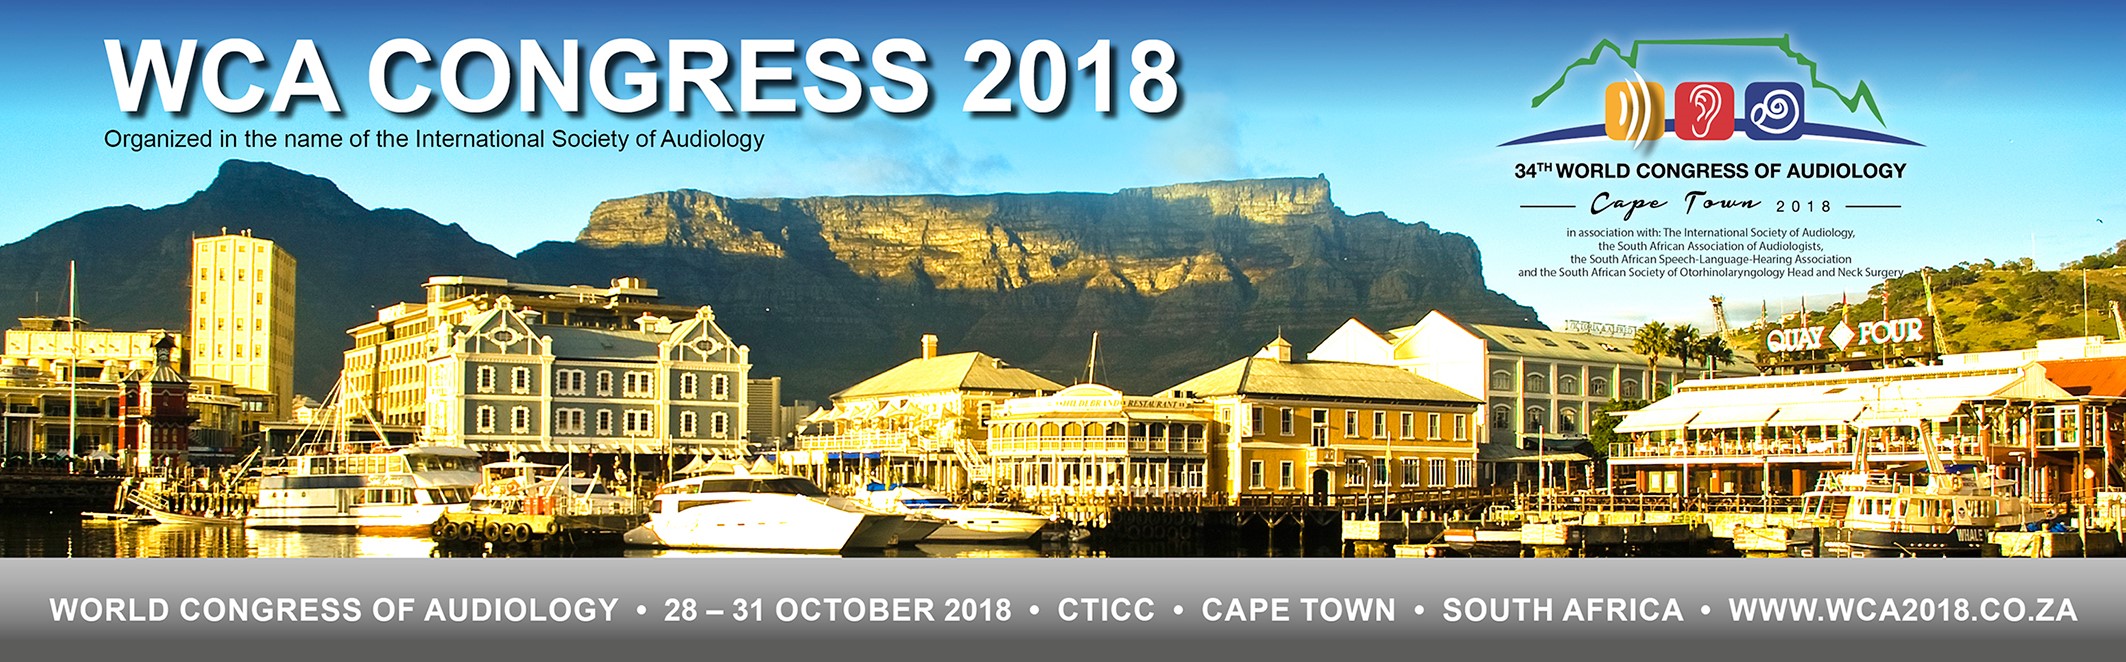 WCA Congress 2018 www.wca2018.co.za